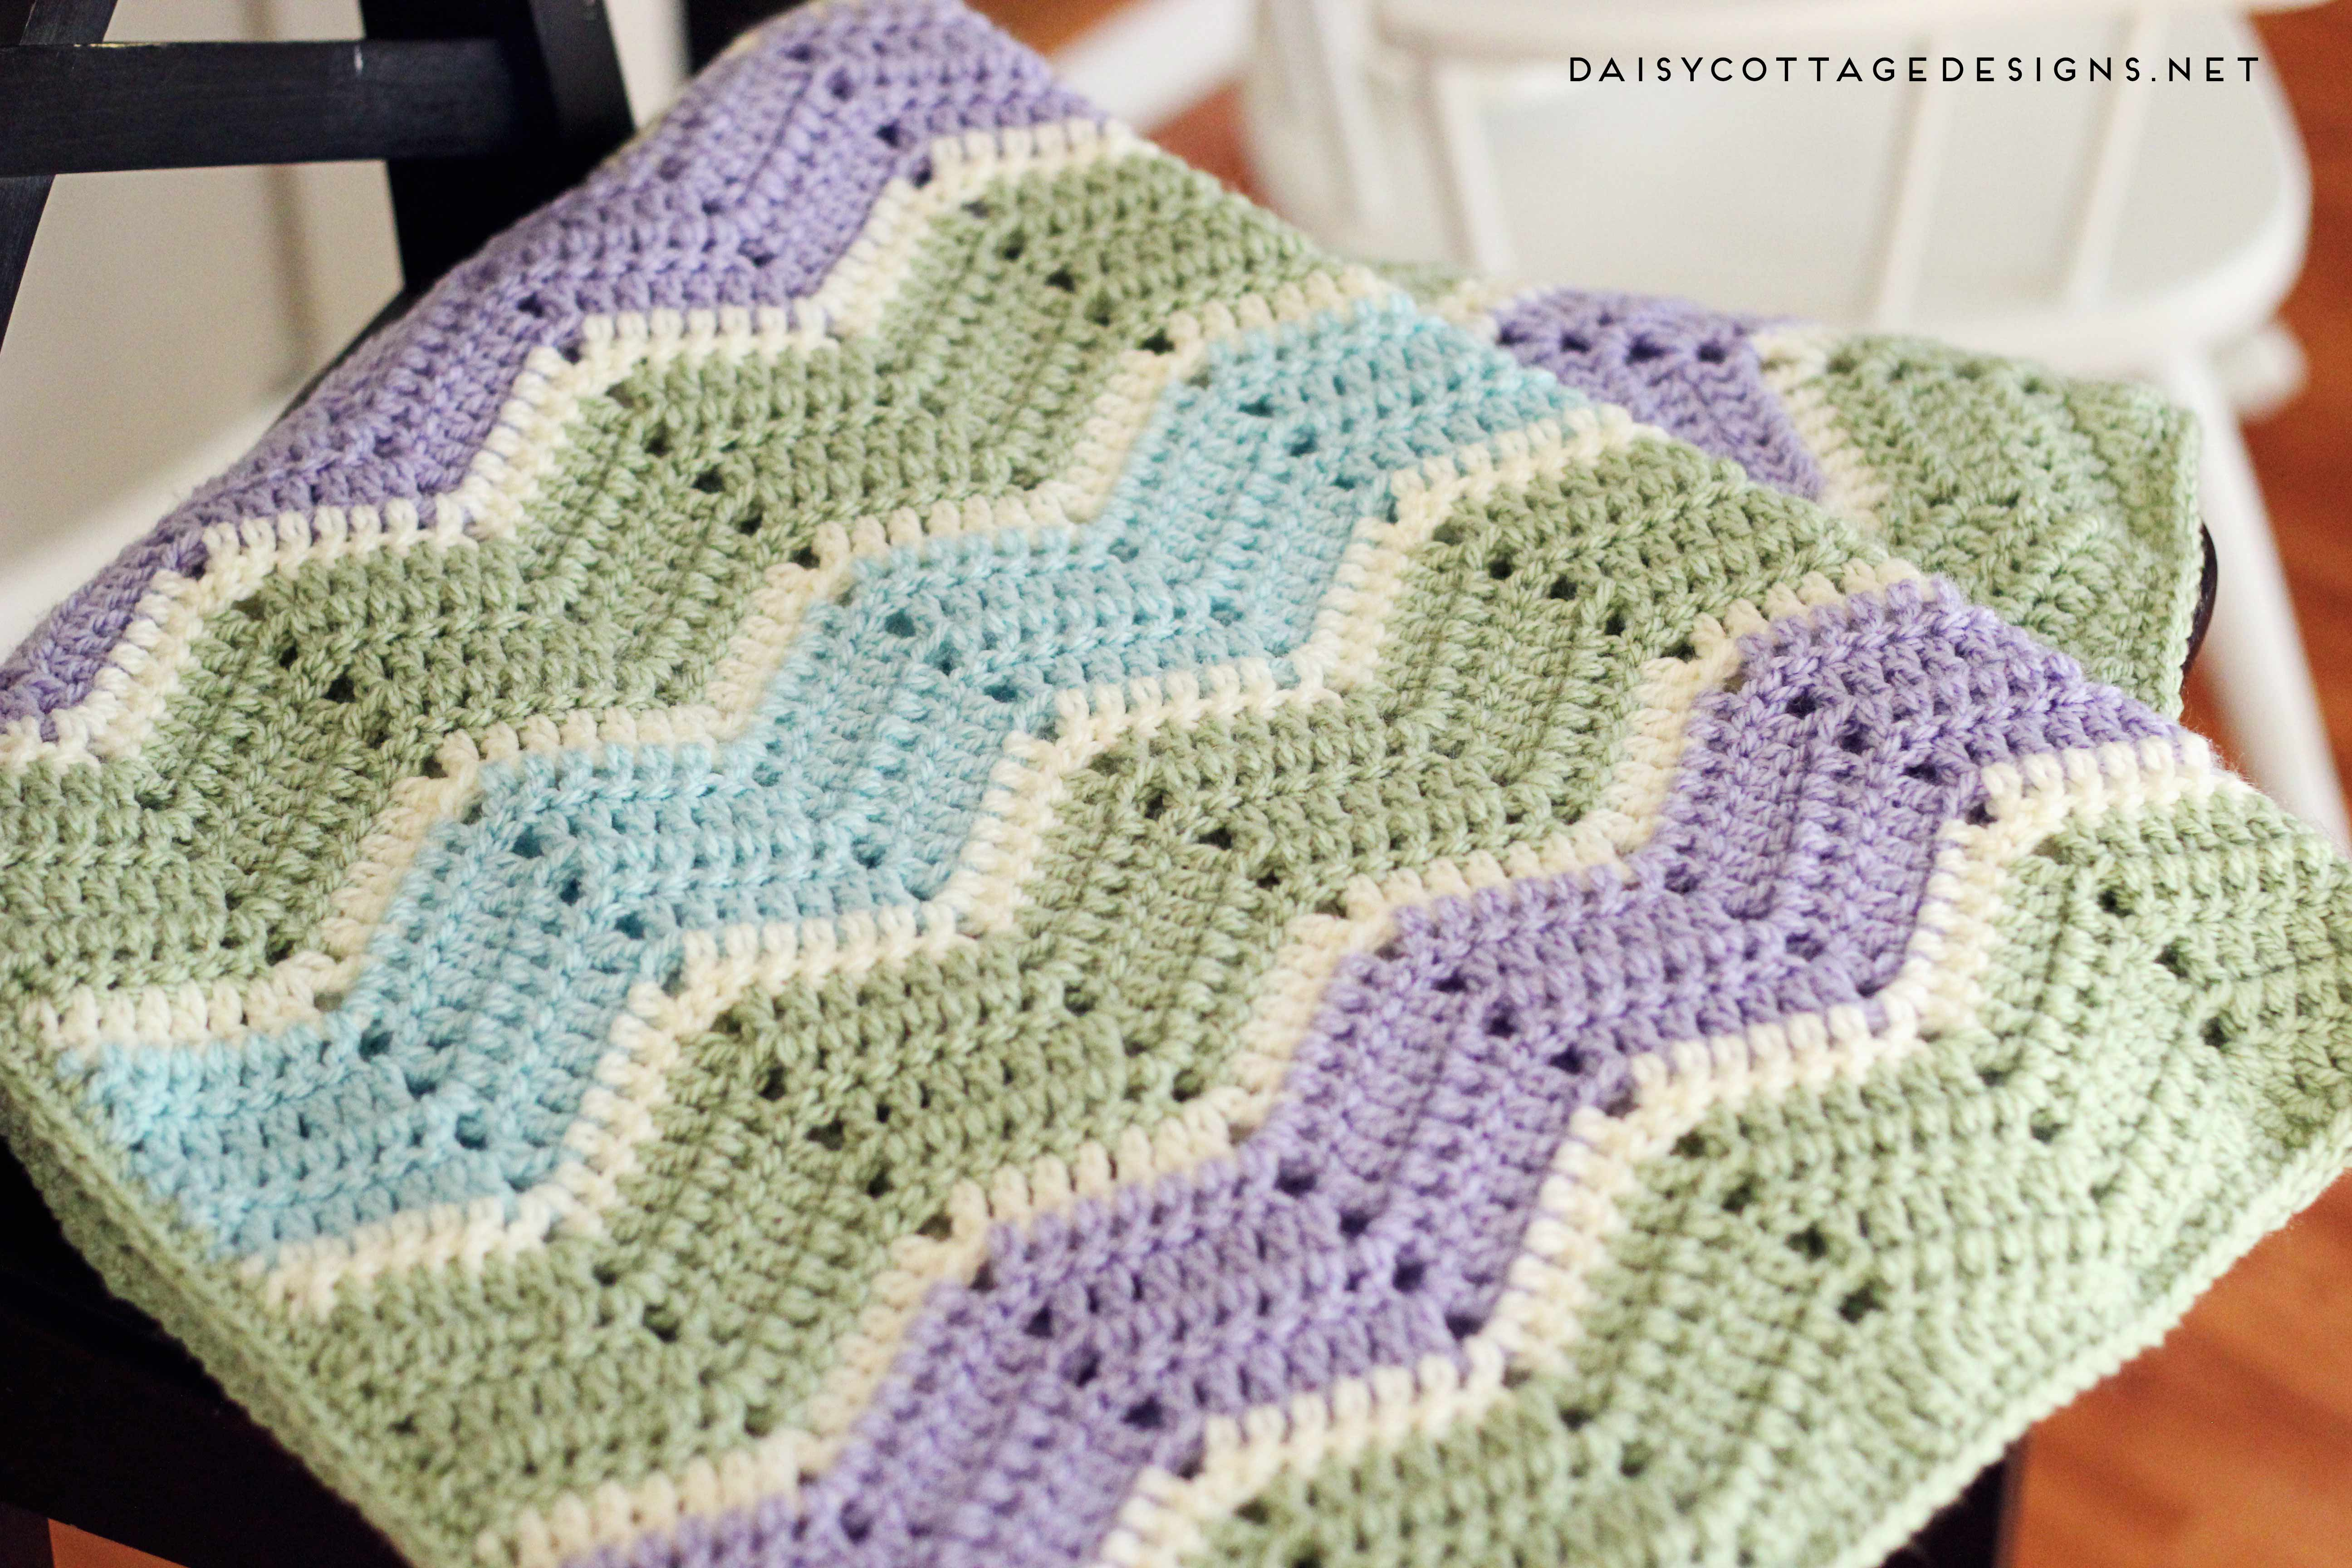 Crochet Baby Blanket Free Pattern Easy Chevron Blanket Crochet Pattern Daisy Cottage Designs